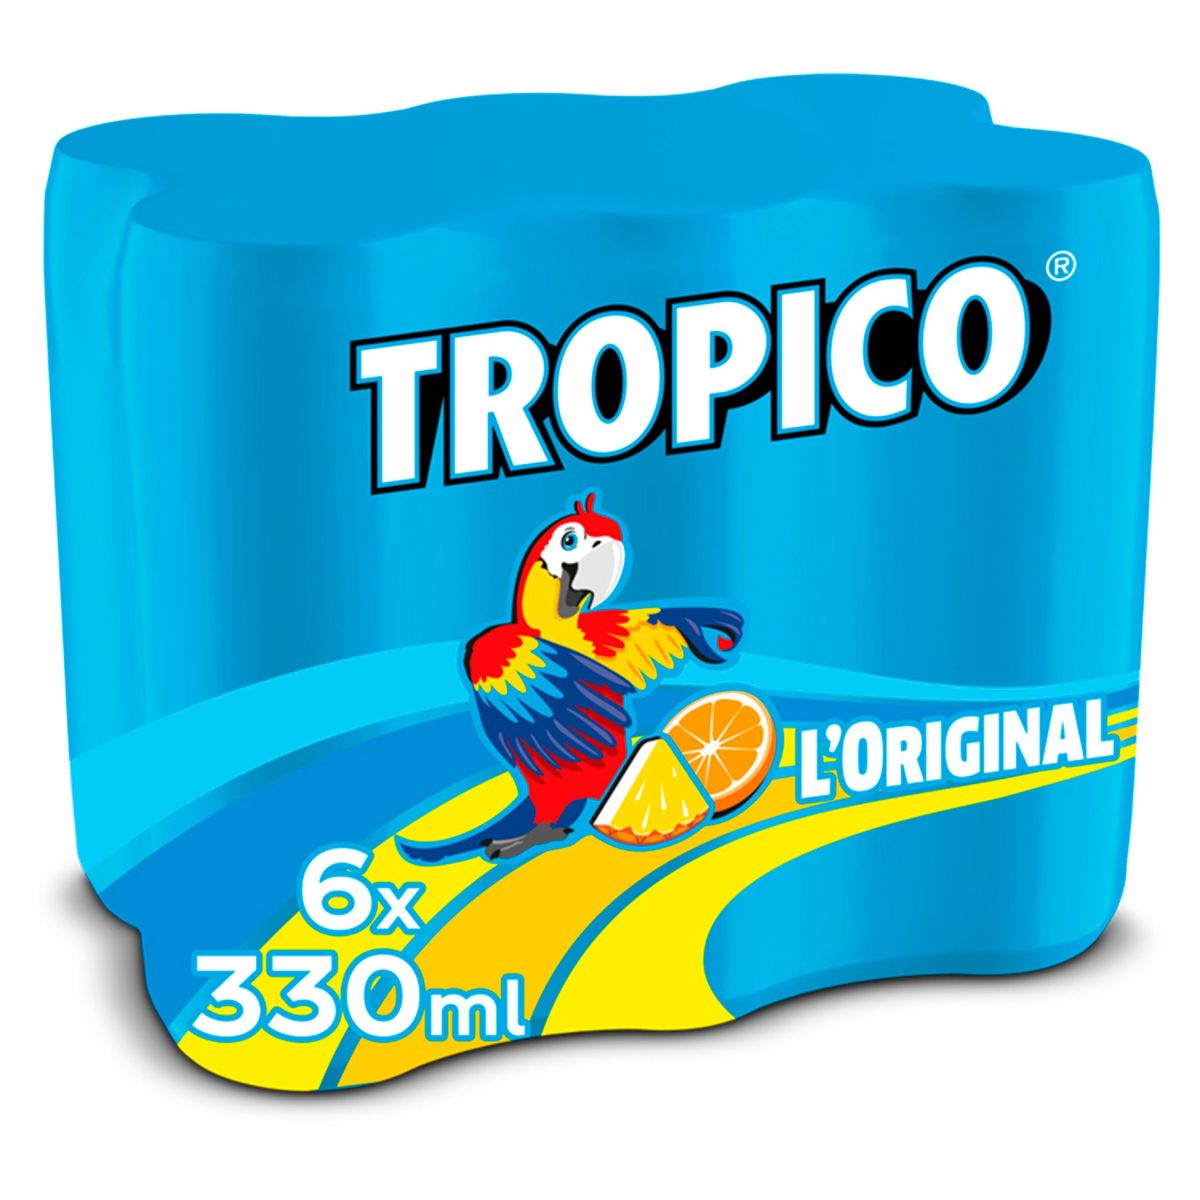 Tropico l'Original 6 x 330 ml